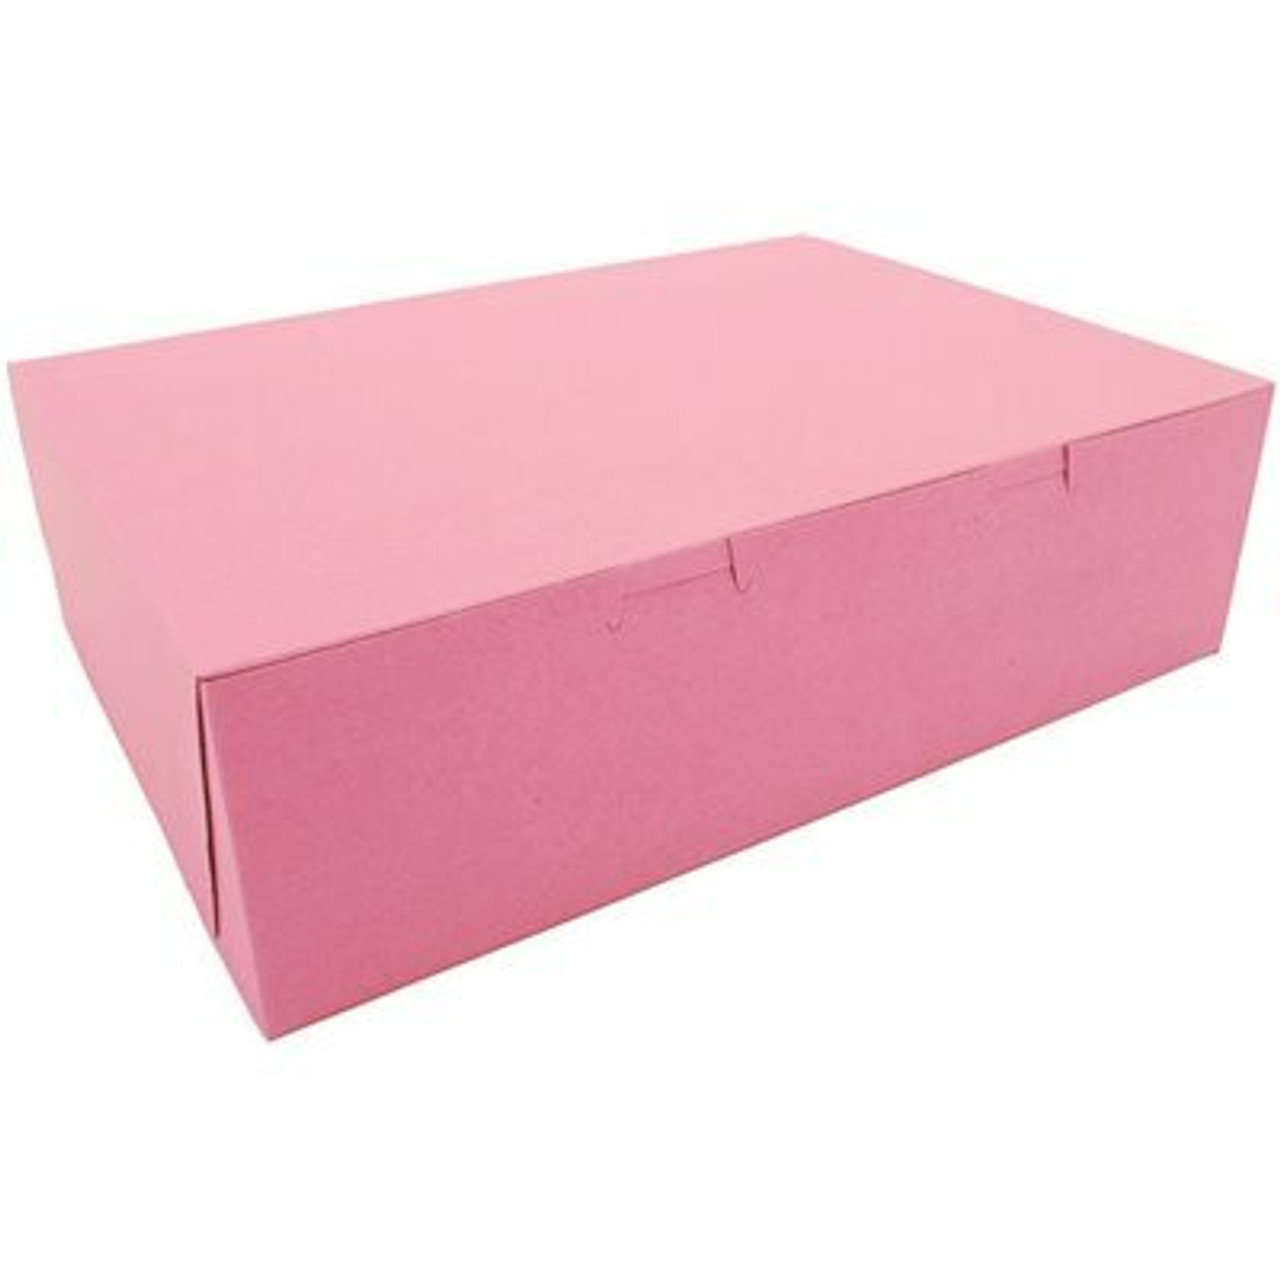 Southern Champion Tray Pink Non-Window Bakery Box 14 X 10 X 4" (100 Per Case)